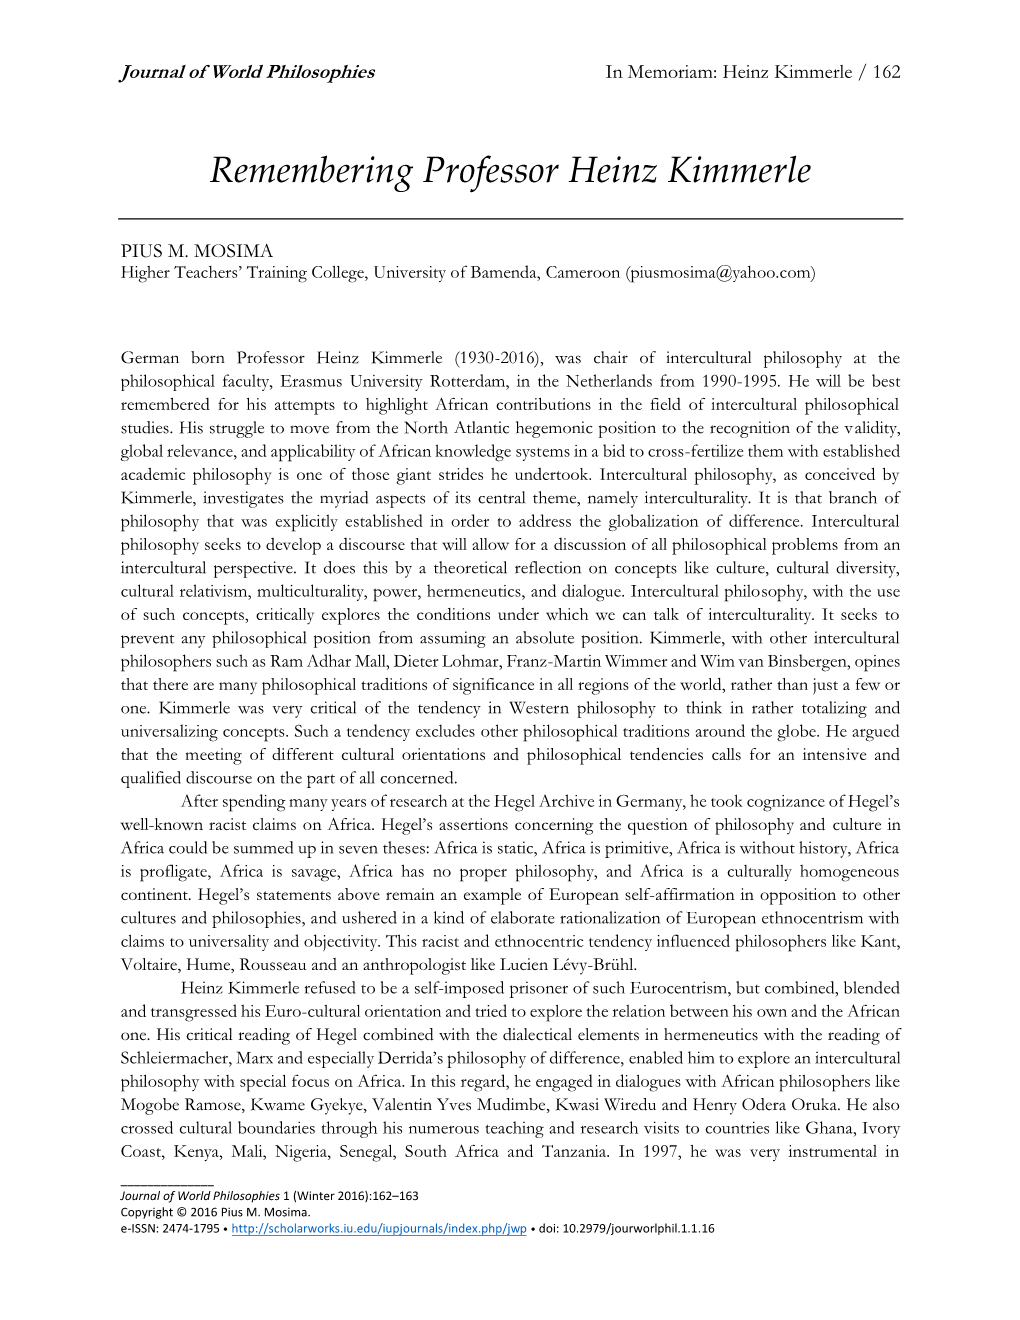 Remembering Professor Heinz Kimmerle